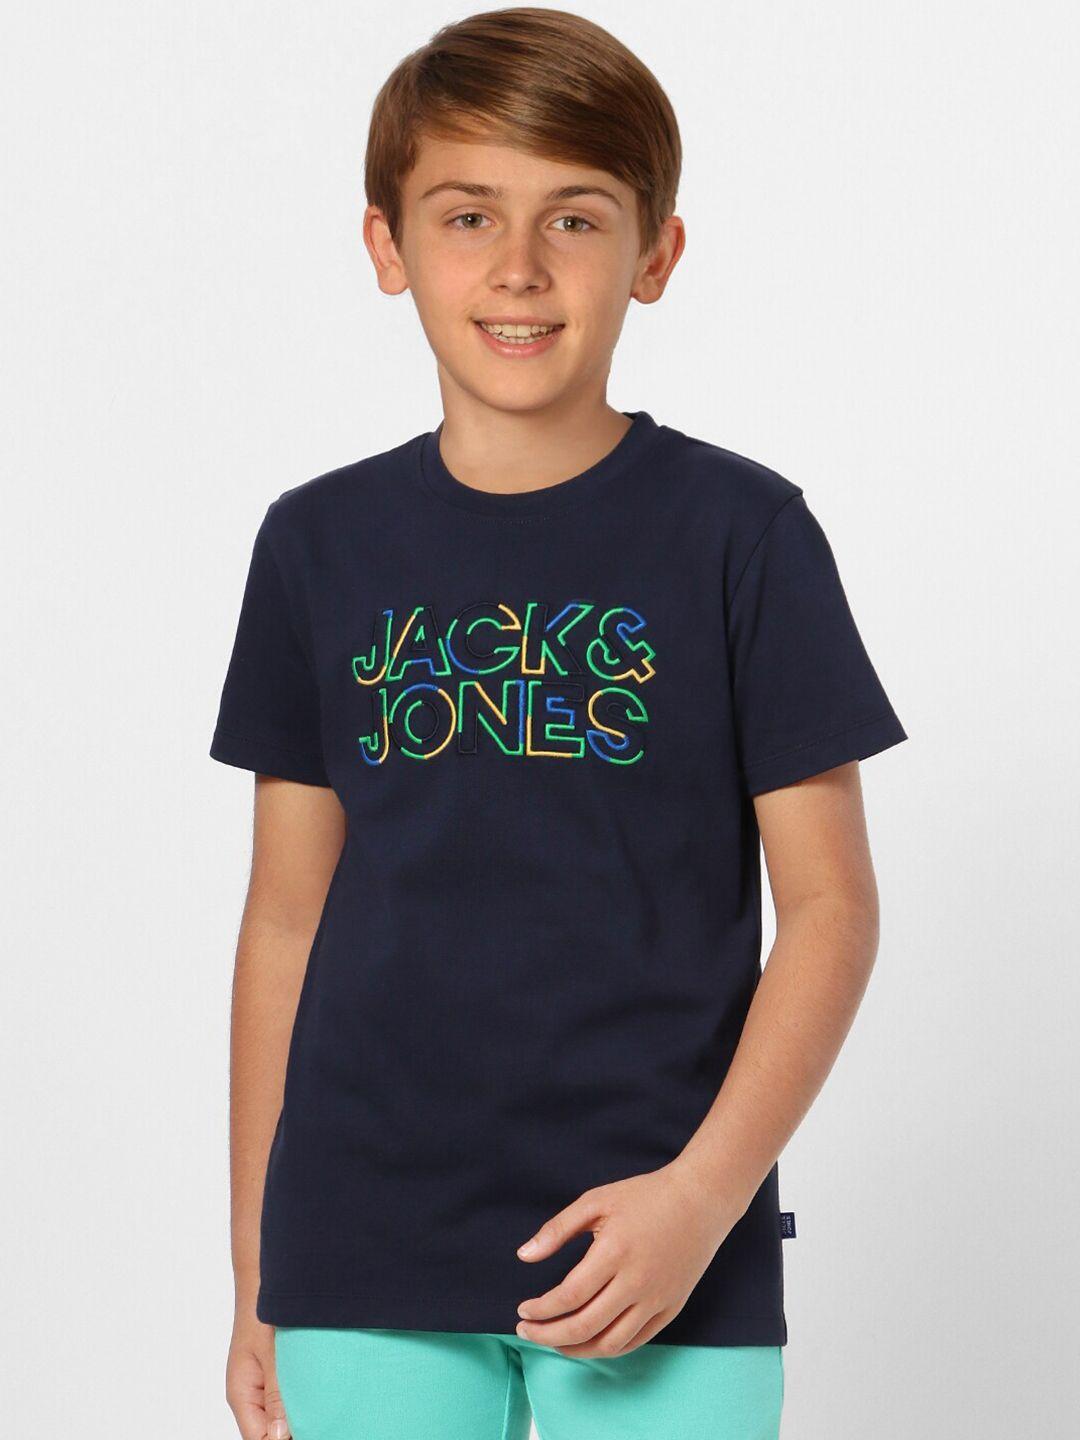 jack & jones boys navy blue typography printed cotton t-shirt